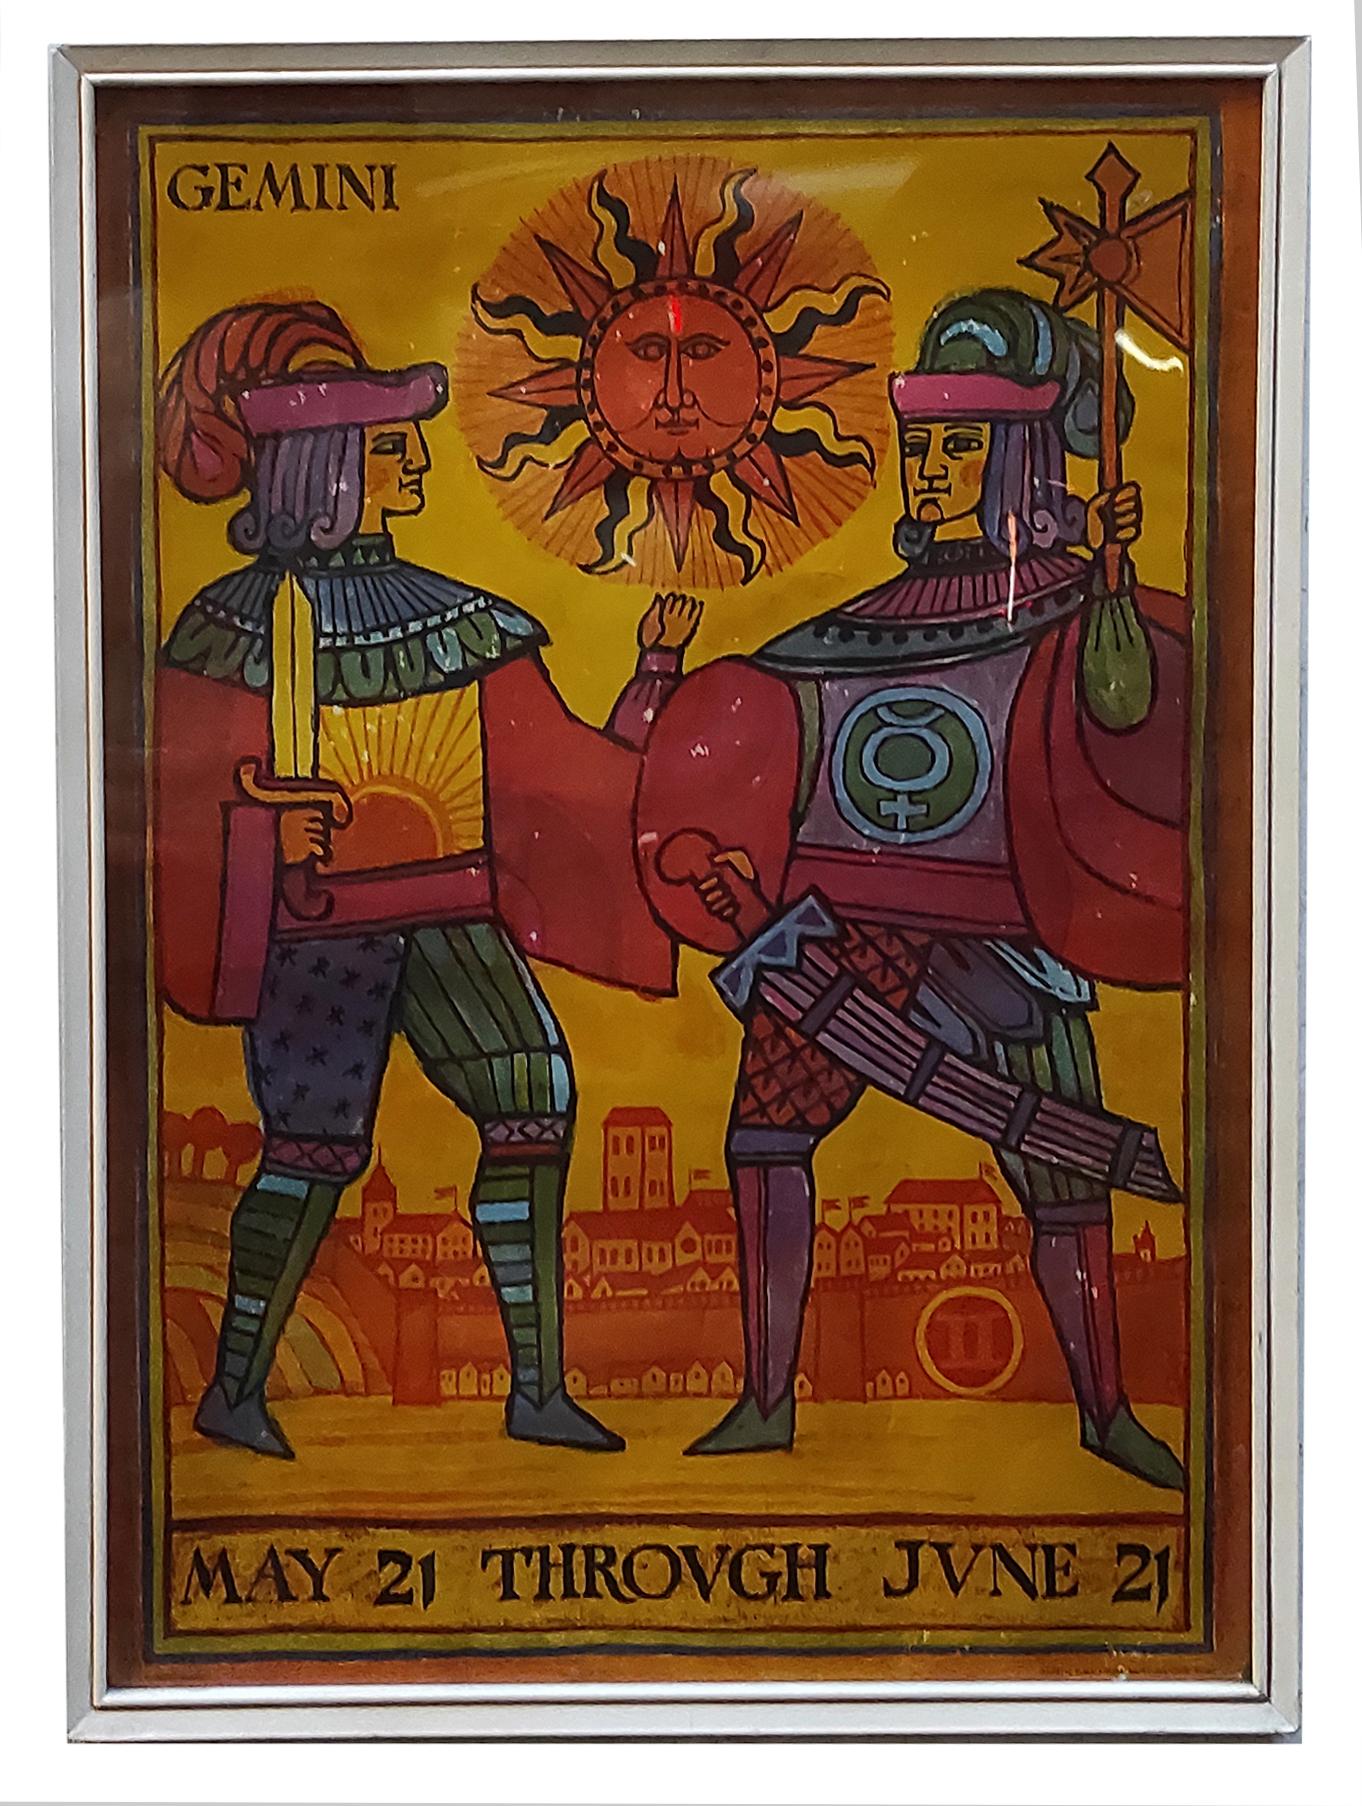 GEMINI - Astrological poster by Jaine Teiko Oka